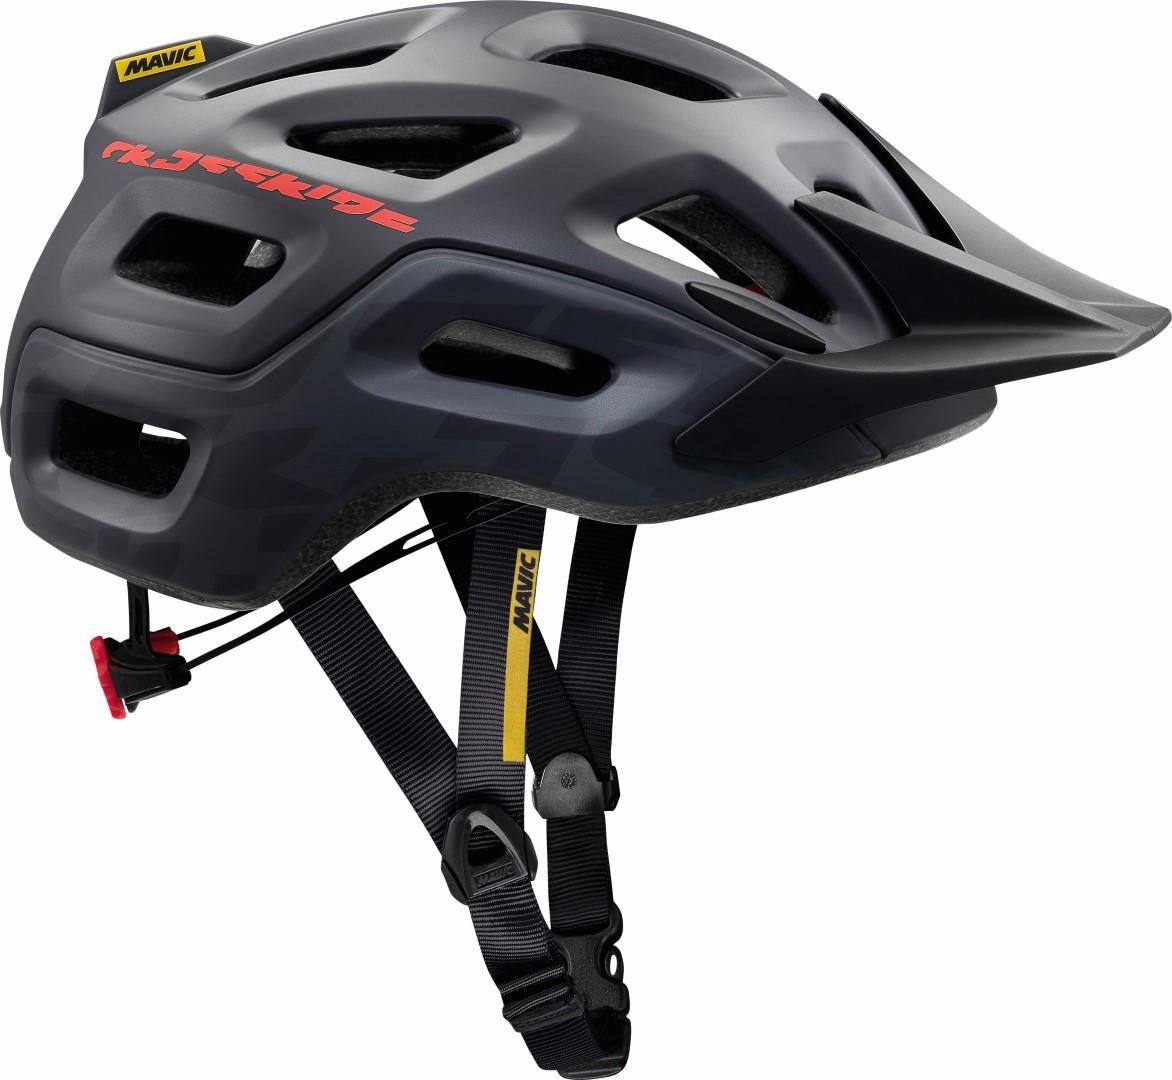 Mavic Crossride MTB Cycling Helmet 2017